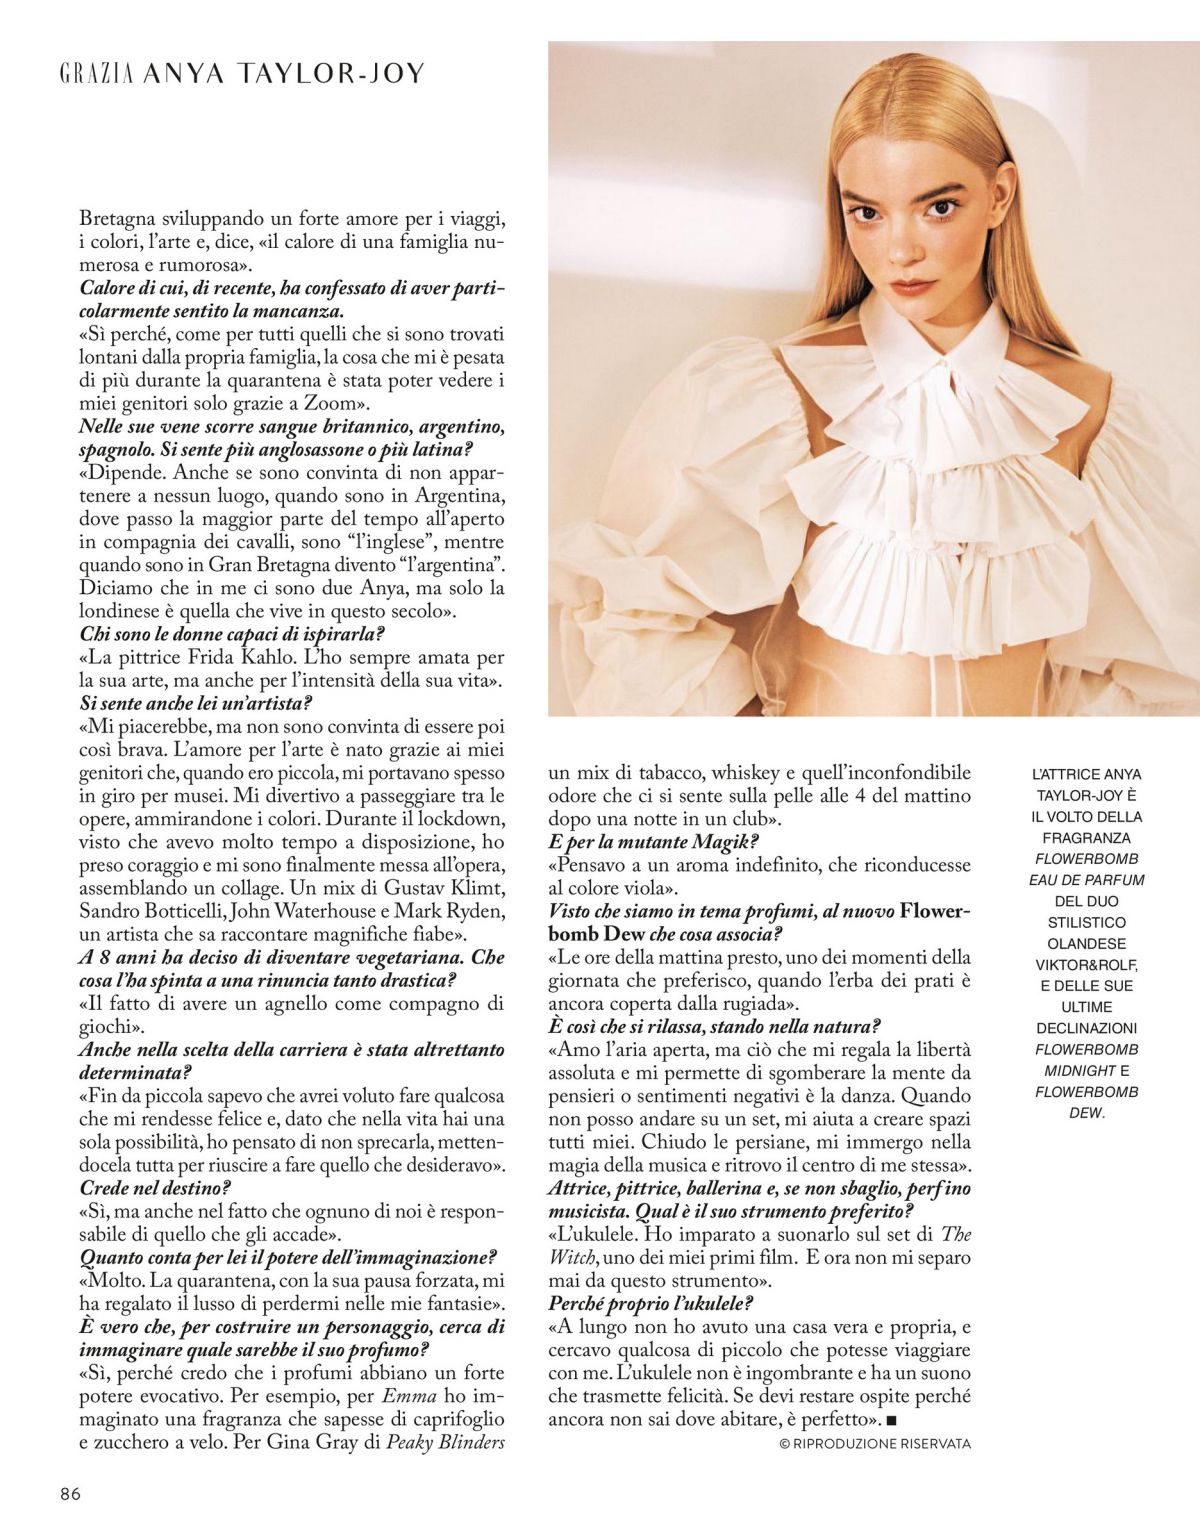 anya-taylor-joy-in-grazia-magazine-italy-september-2020-0.jpg